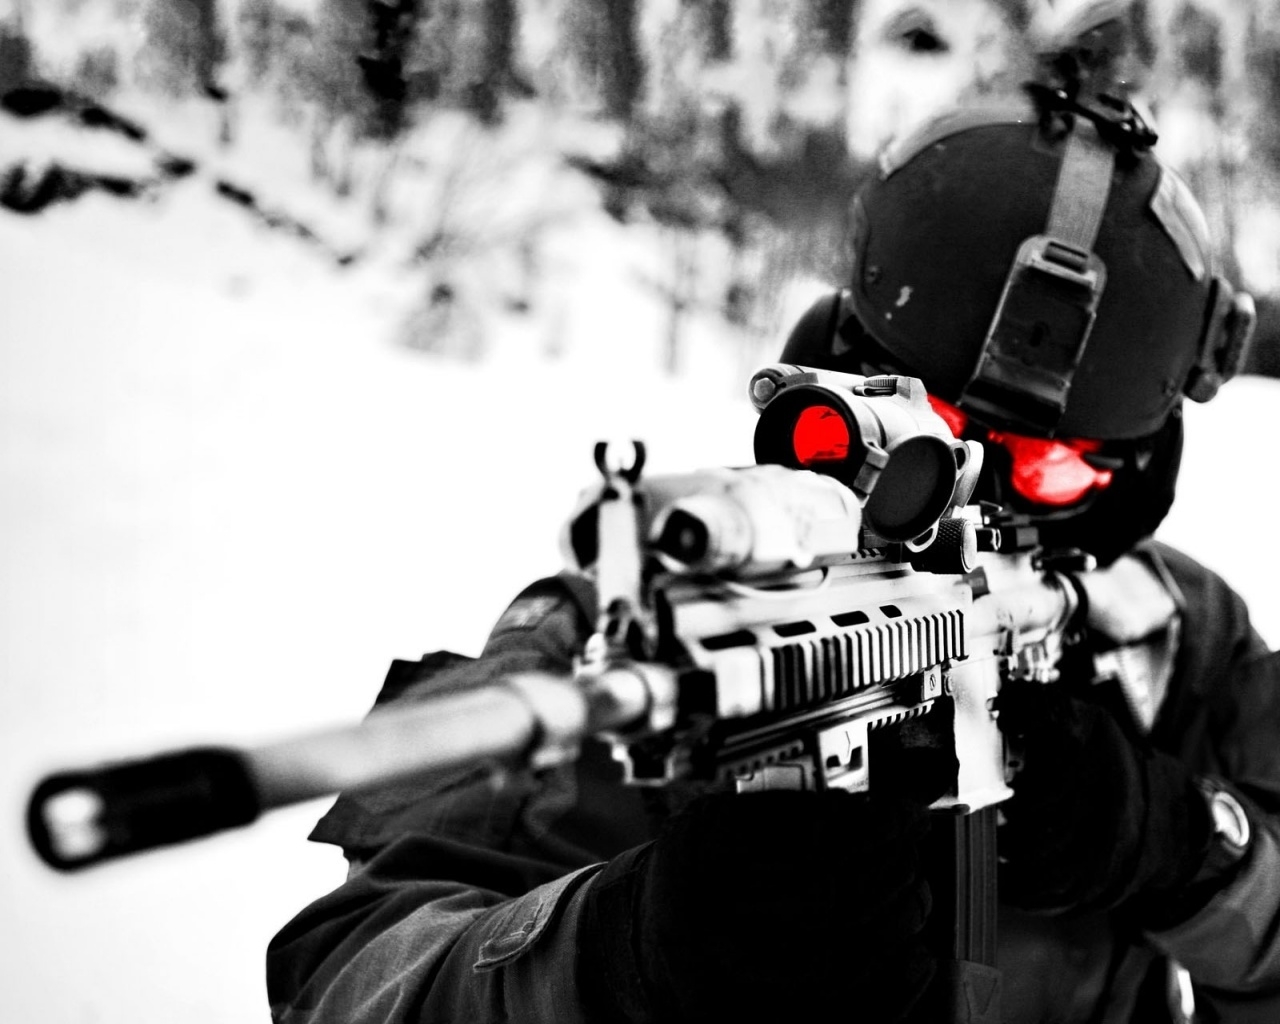 Winter Sniper for 1280 x 1024 resolution